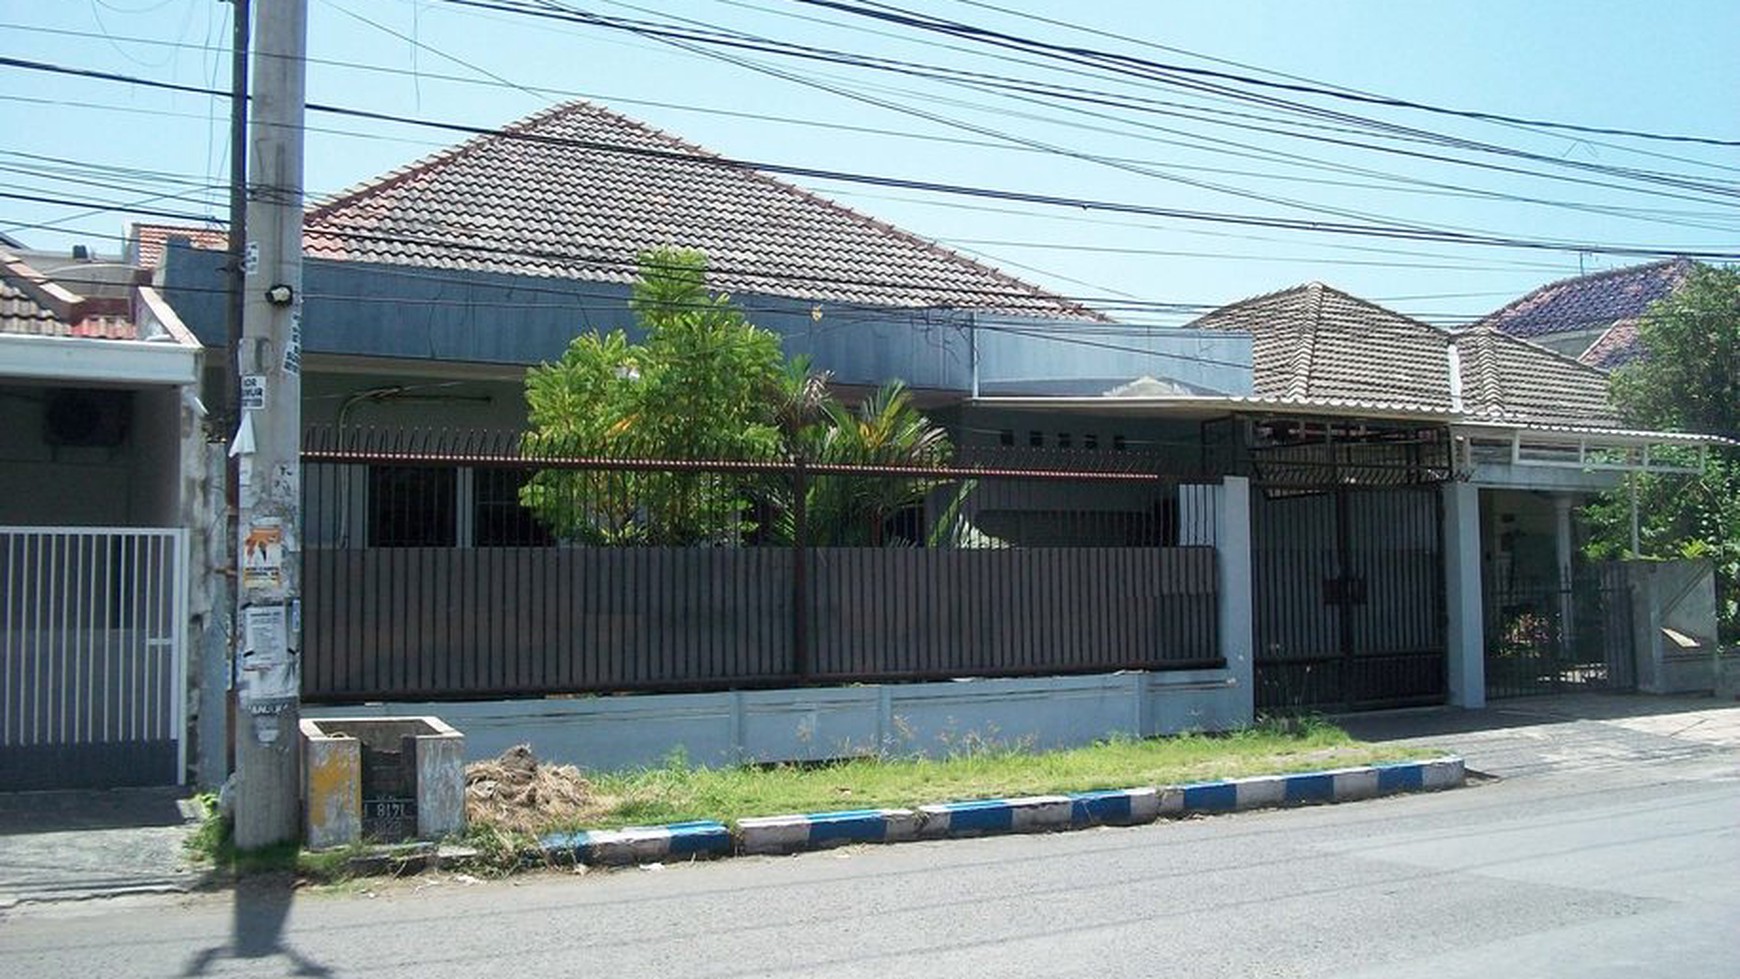 Rumah di Bendul Merisi Selatan Surabaya Selatan, Bagus + Terawat, Lokasi Strategis, Row Jalan Lebar